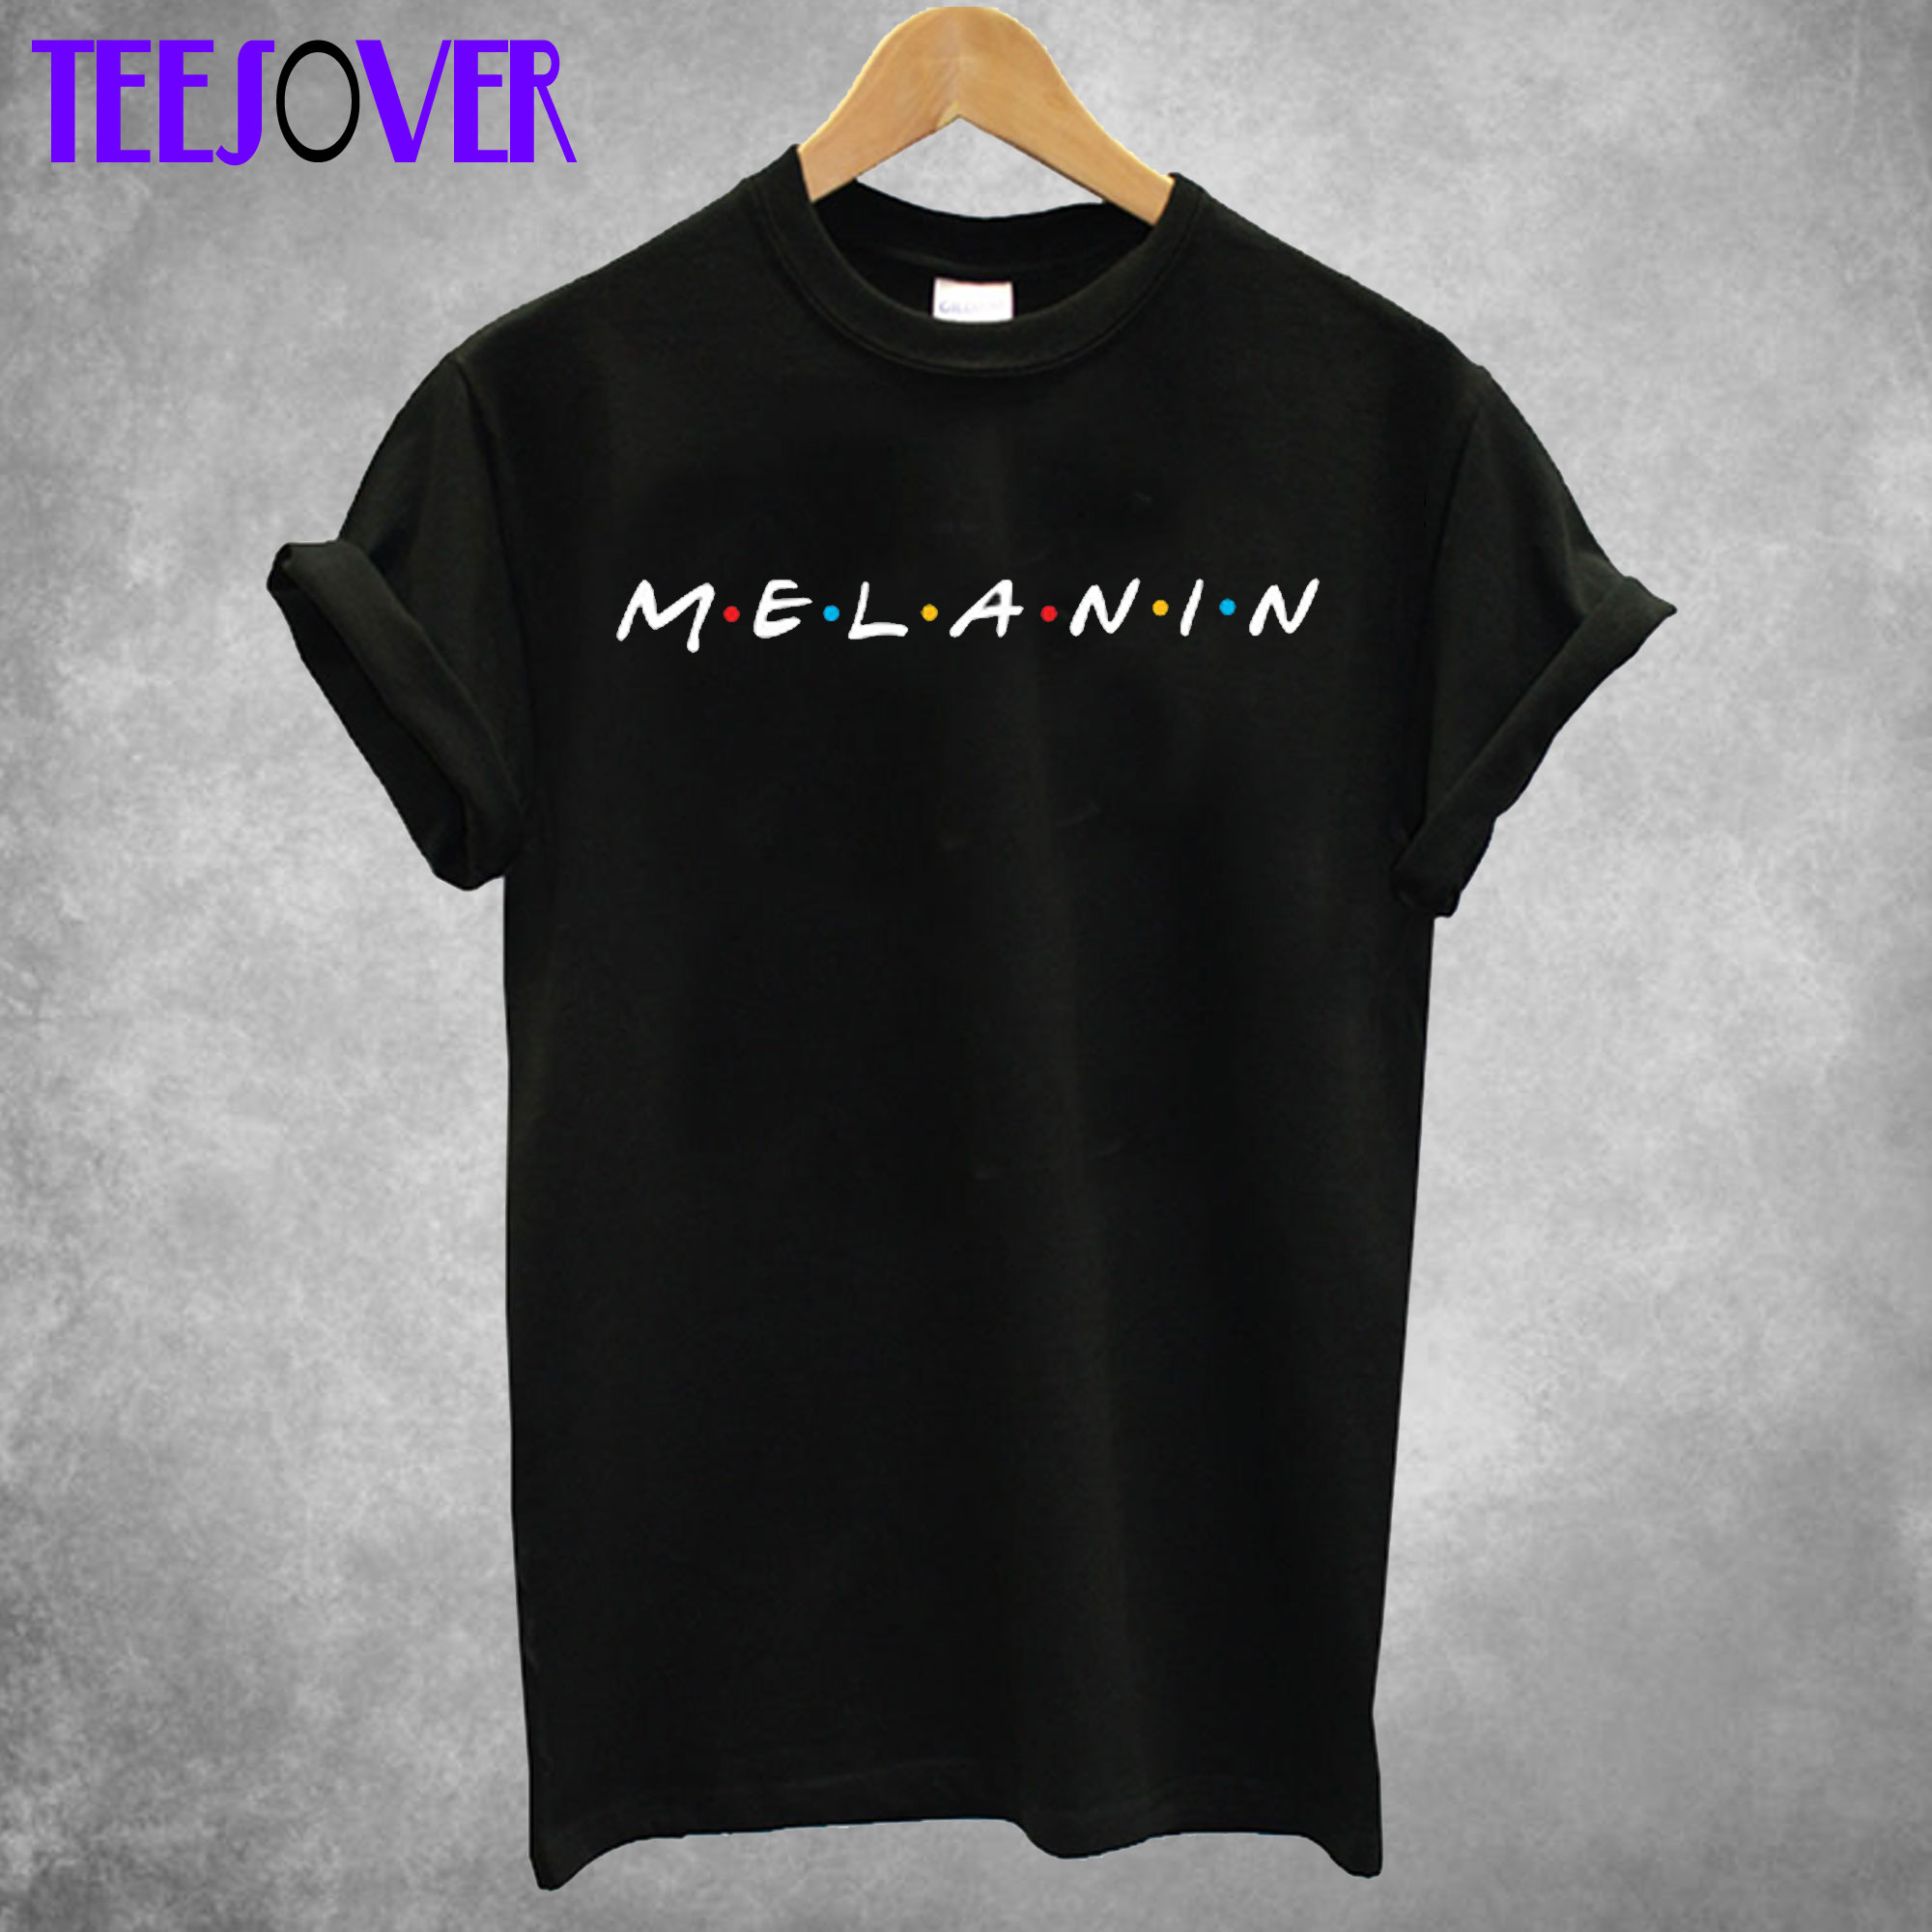 Melanin T-shirt